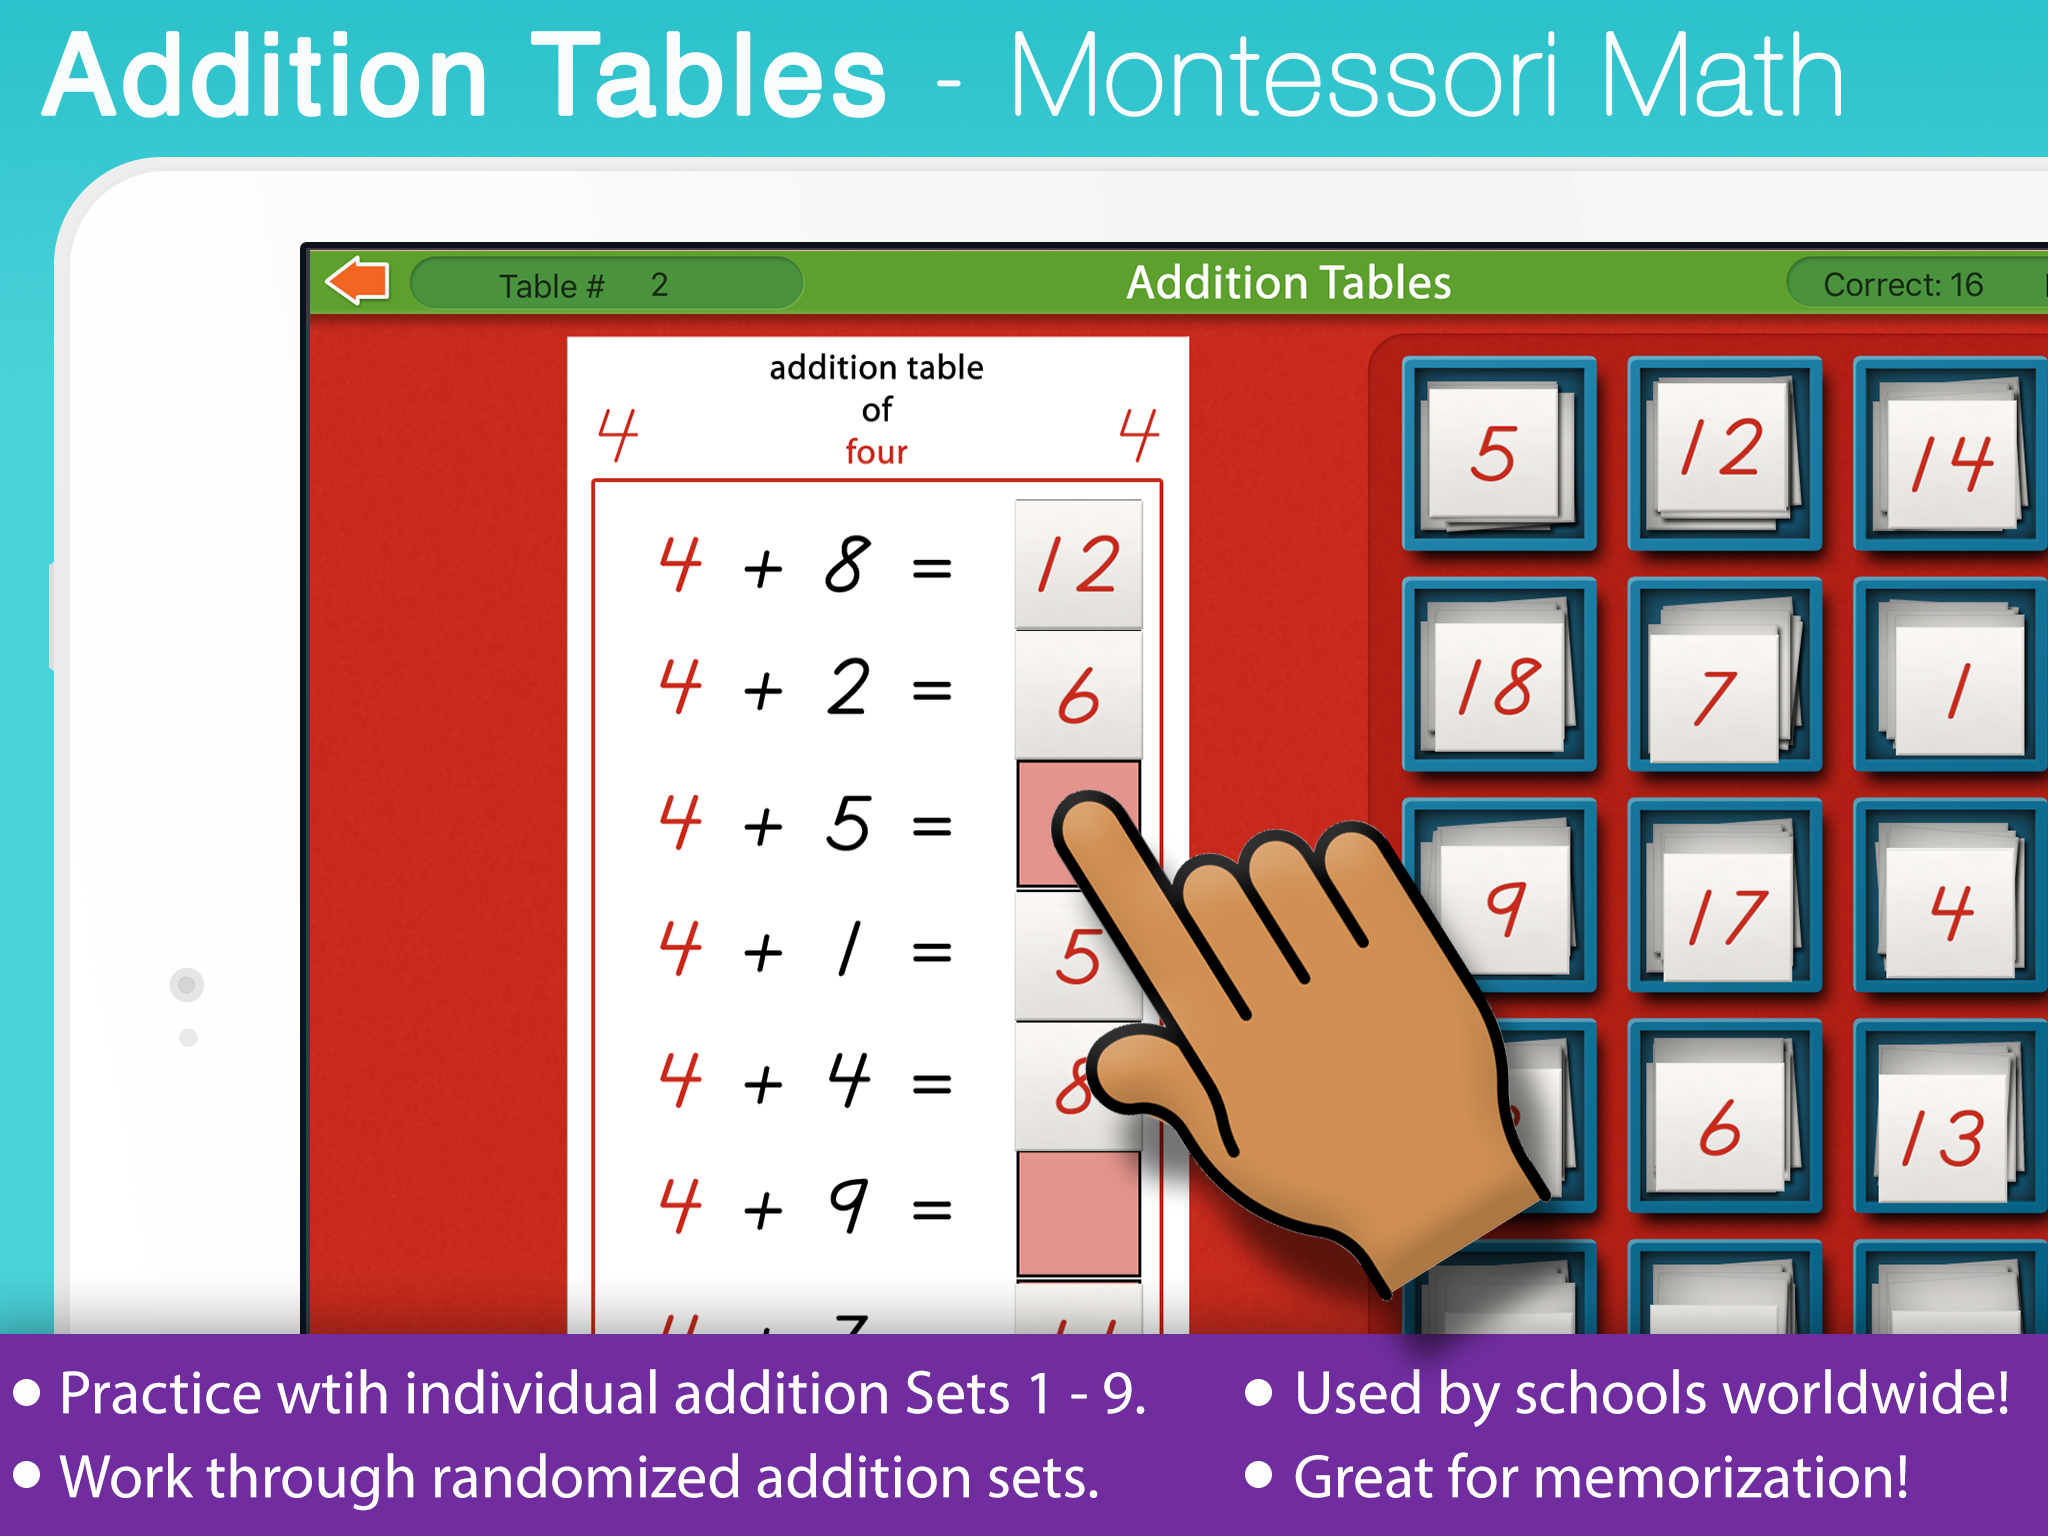 Montessori Addition Chart